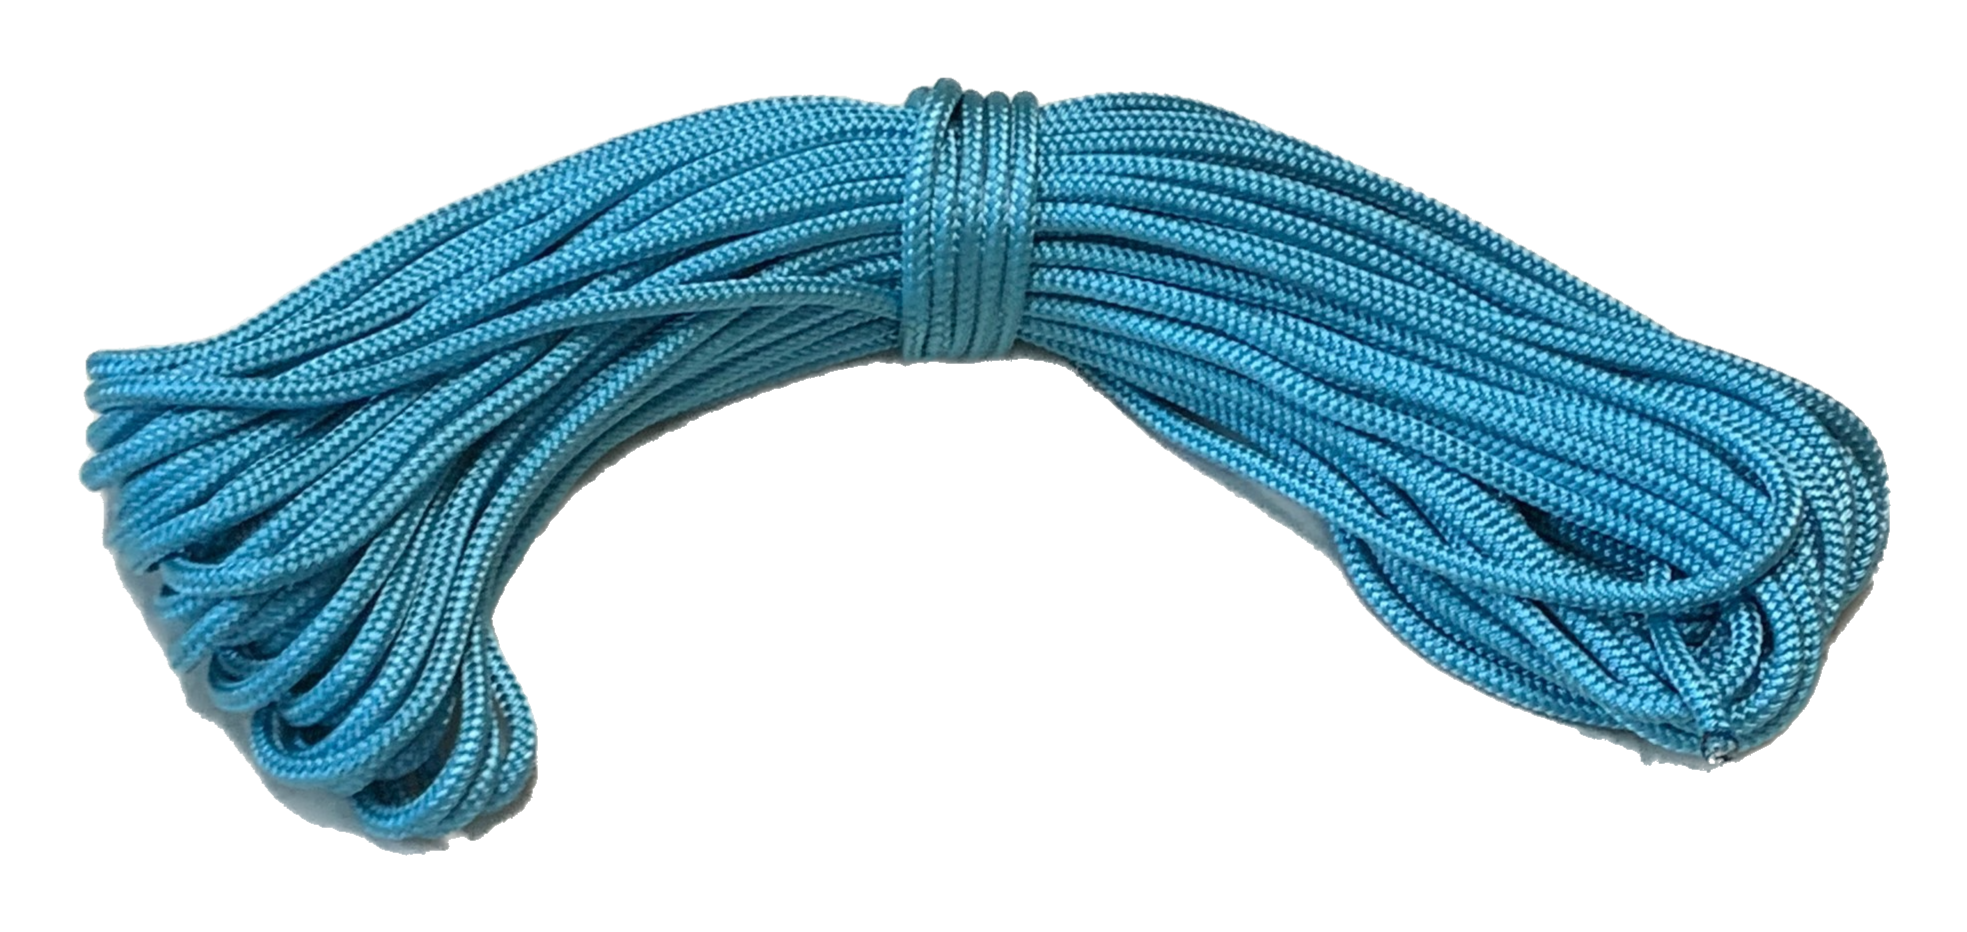 Burgundy Double Braid-Yacht Braid polyester rope hank 1/4 x 150 ft 